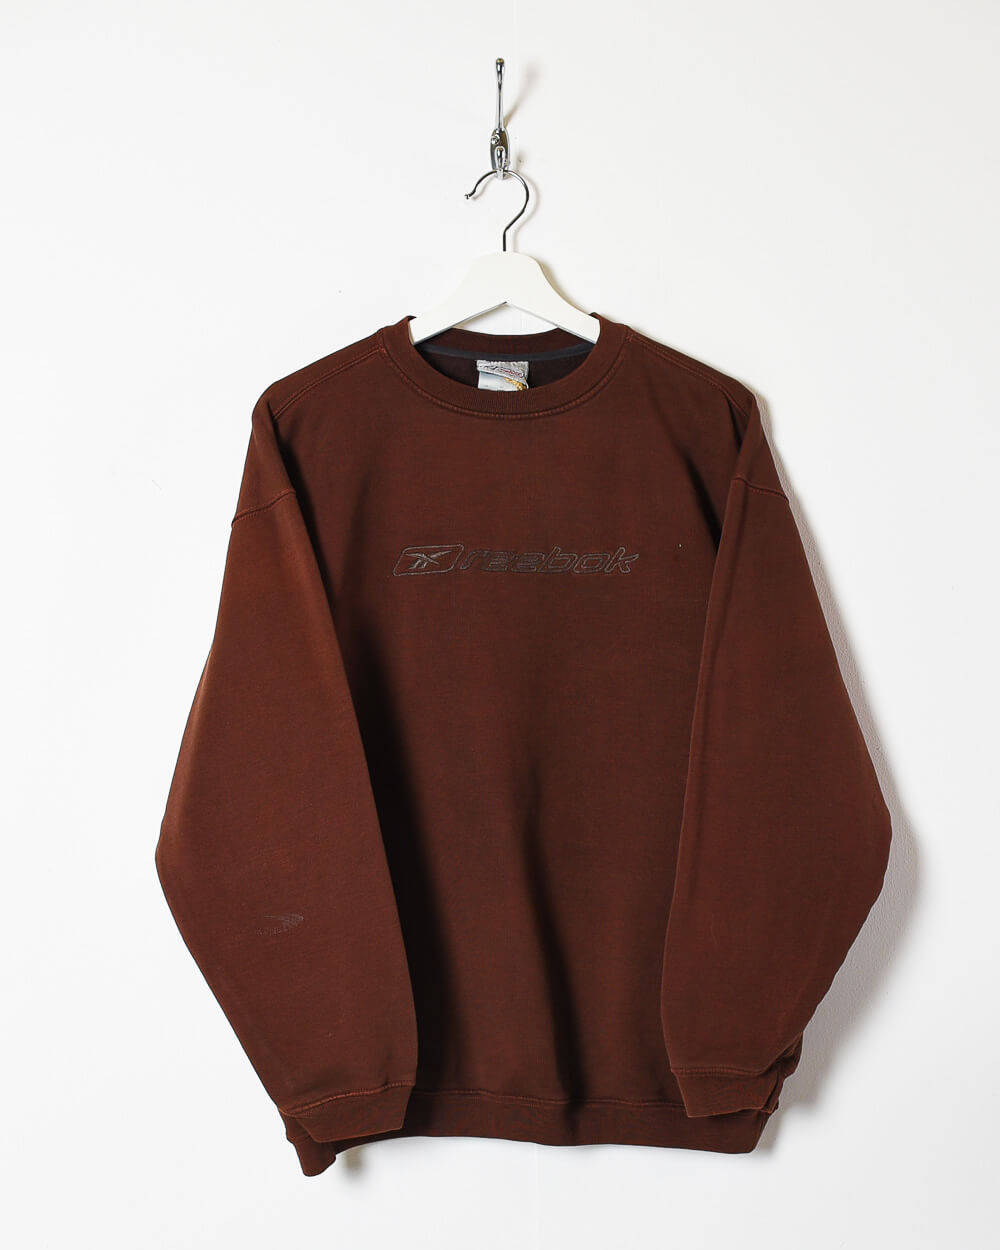 Brown Reebok Sweatshirt - Small